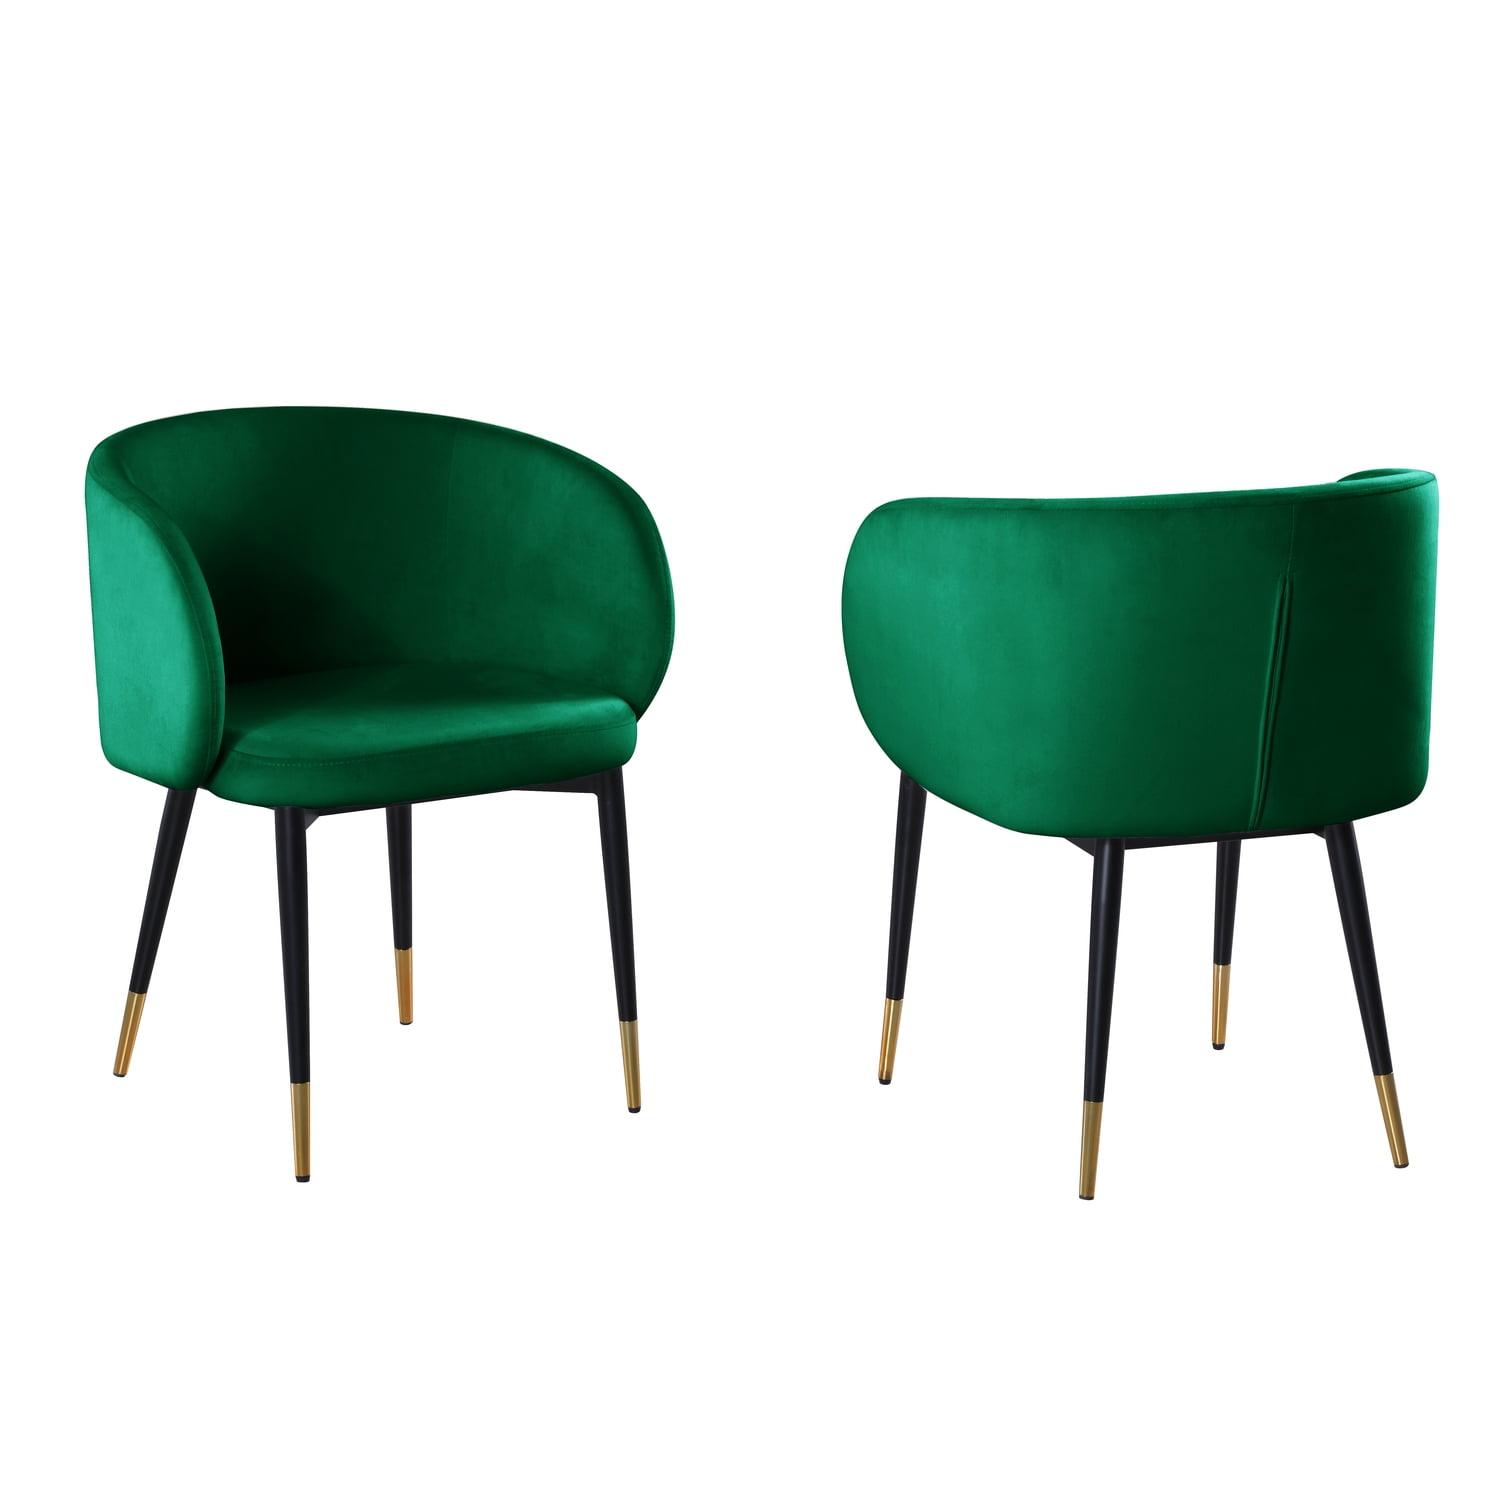 Elegant Green Velvet Low Side Chair with Gold-Tipped Black Legs